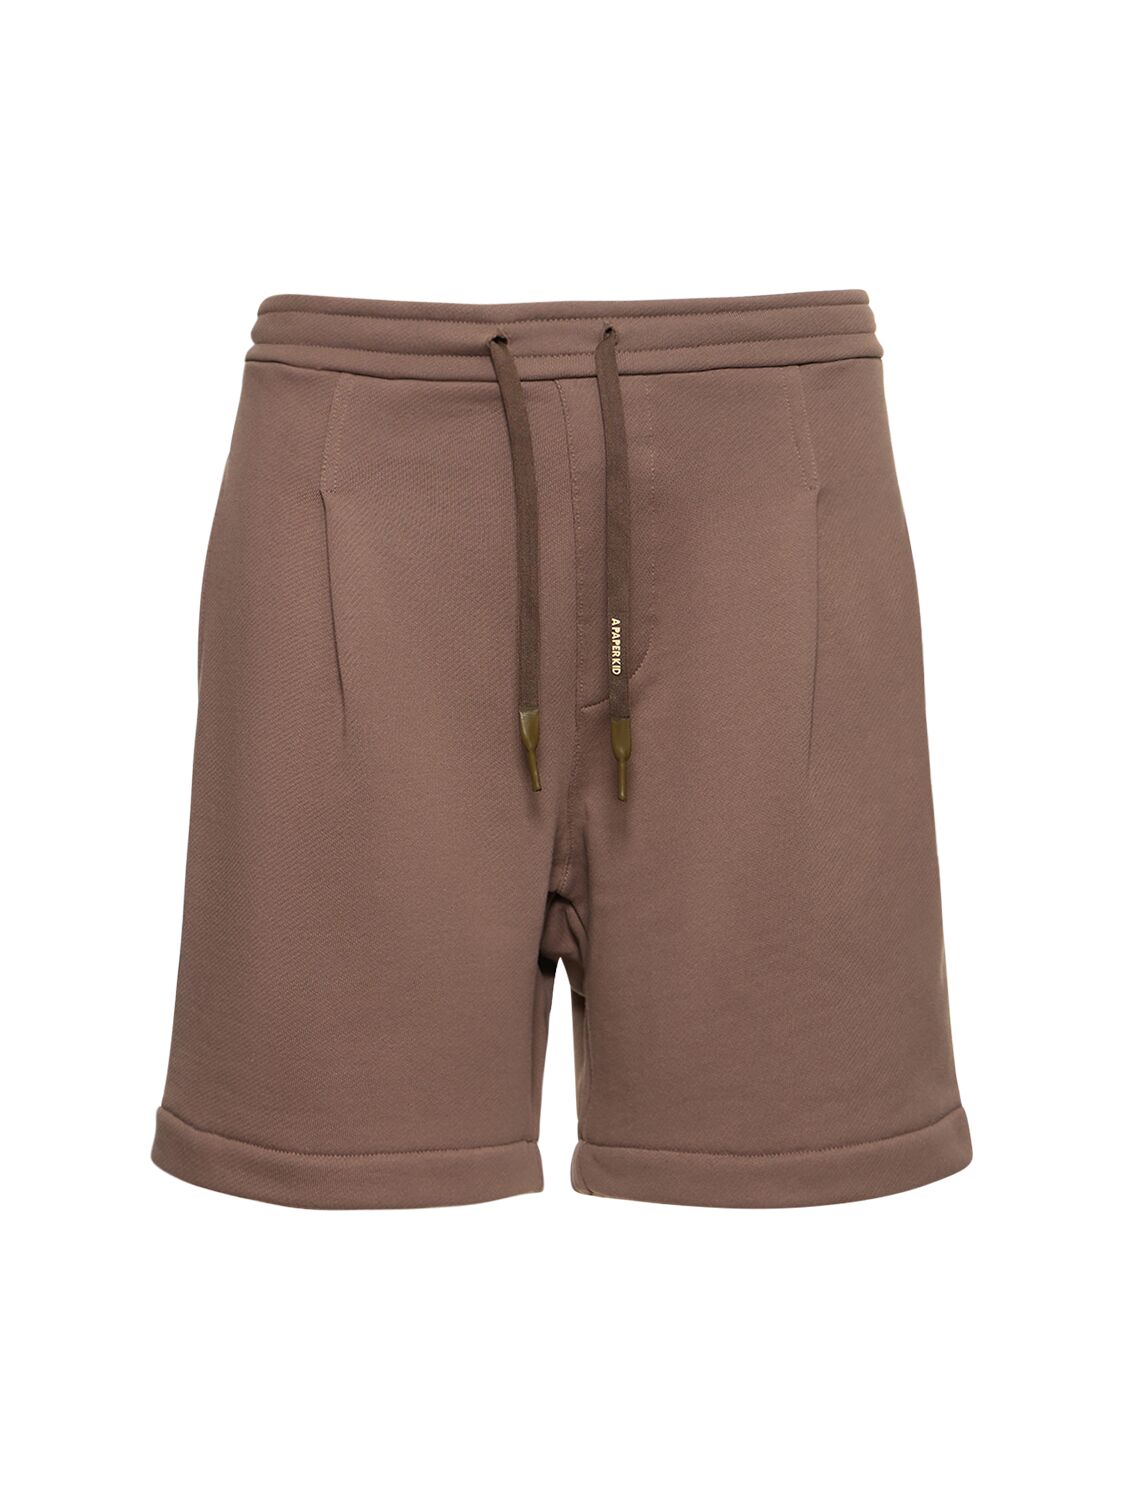 A PAPER KID Unisex Cotton Sweat Shorts